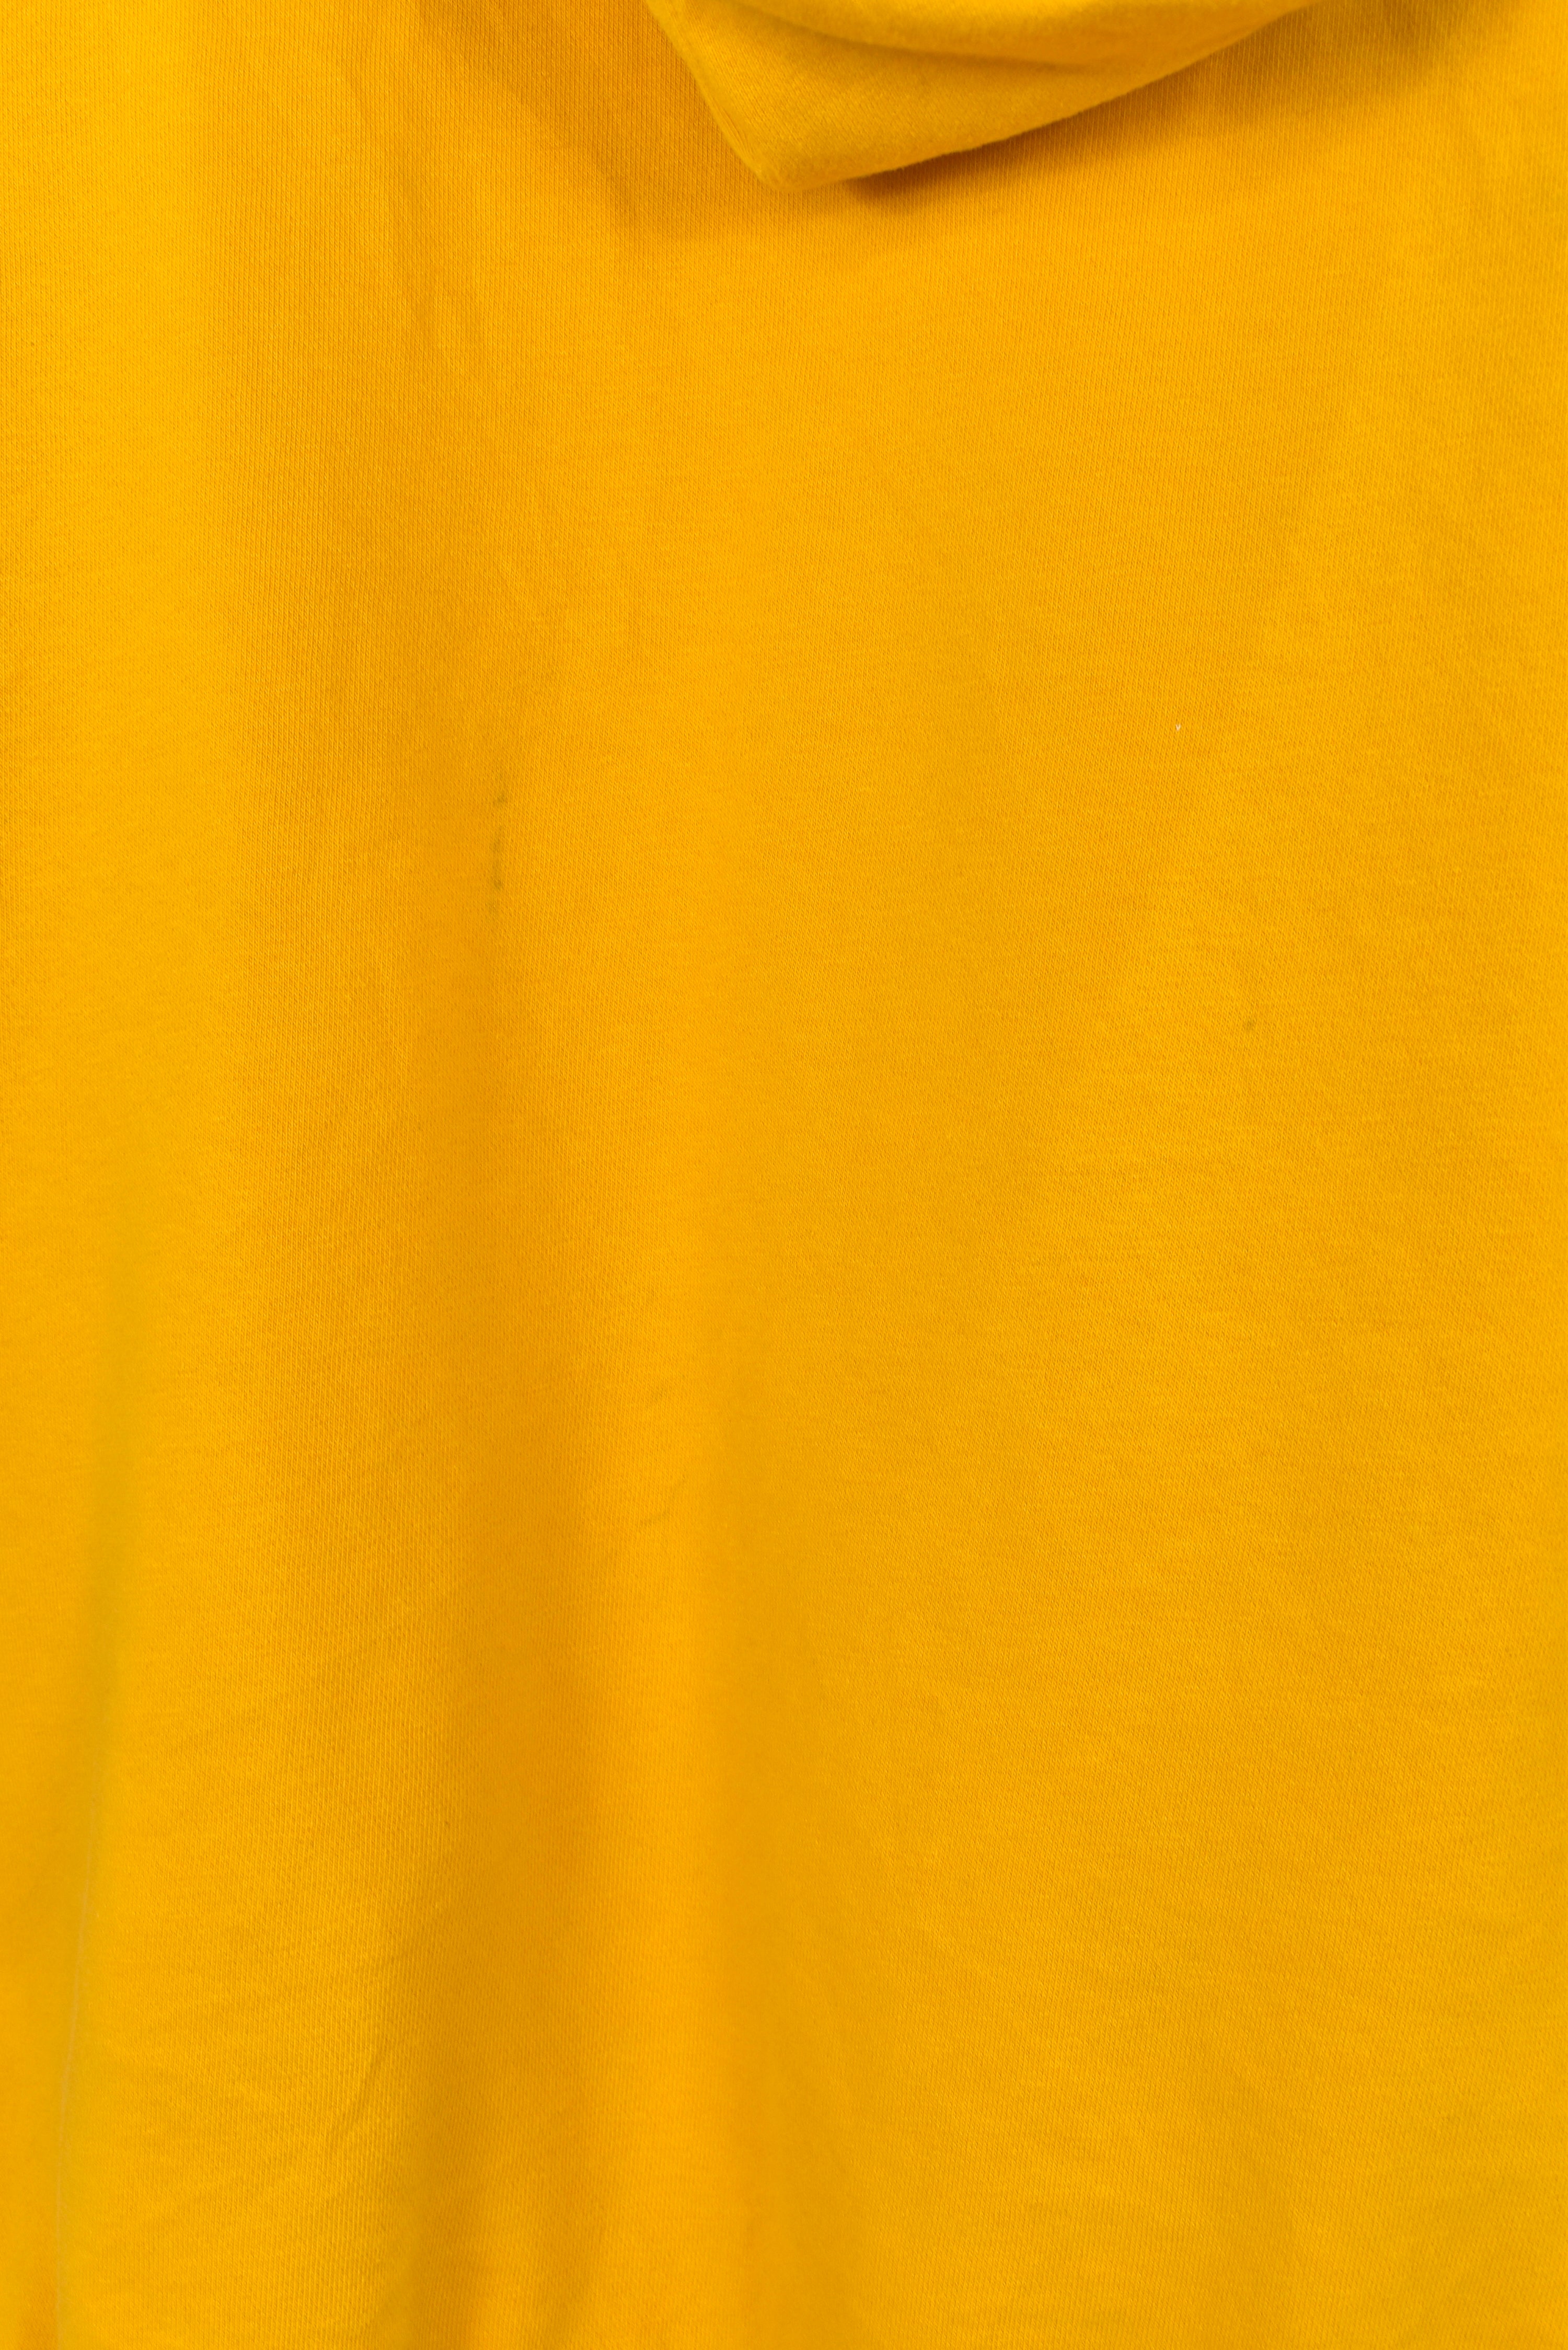 Vintage Green Bay Packers hoodie, yellow NFL embroidered sweatshirt - XL